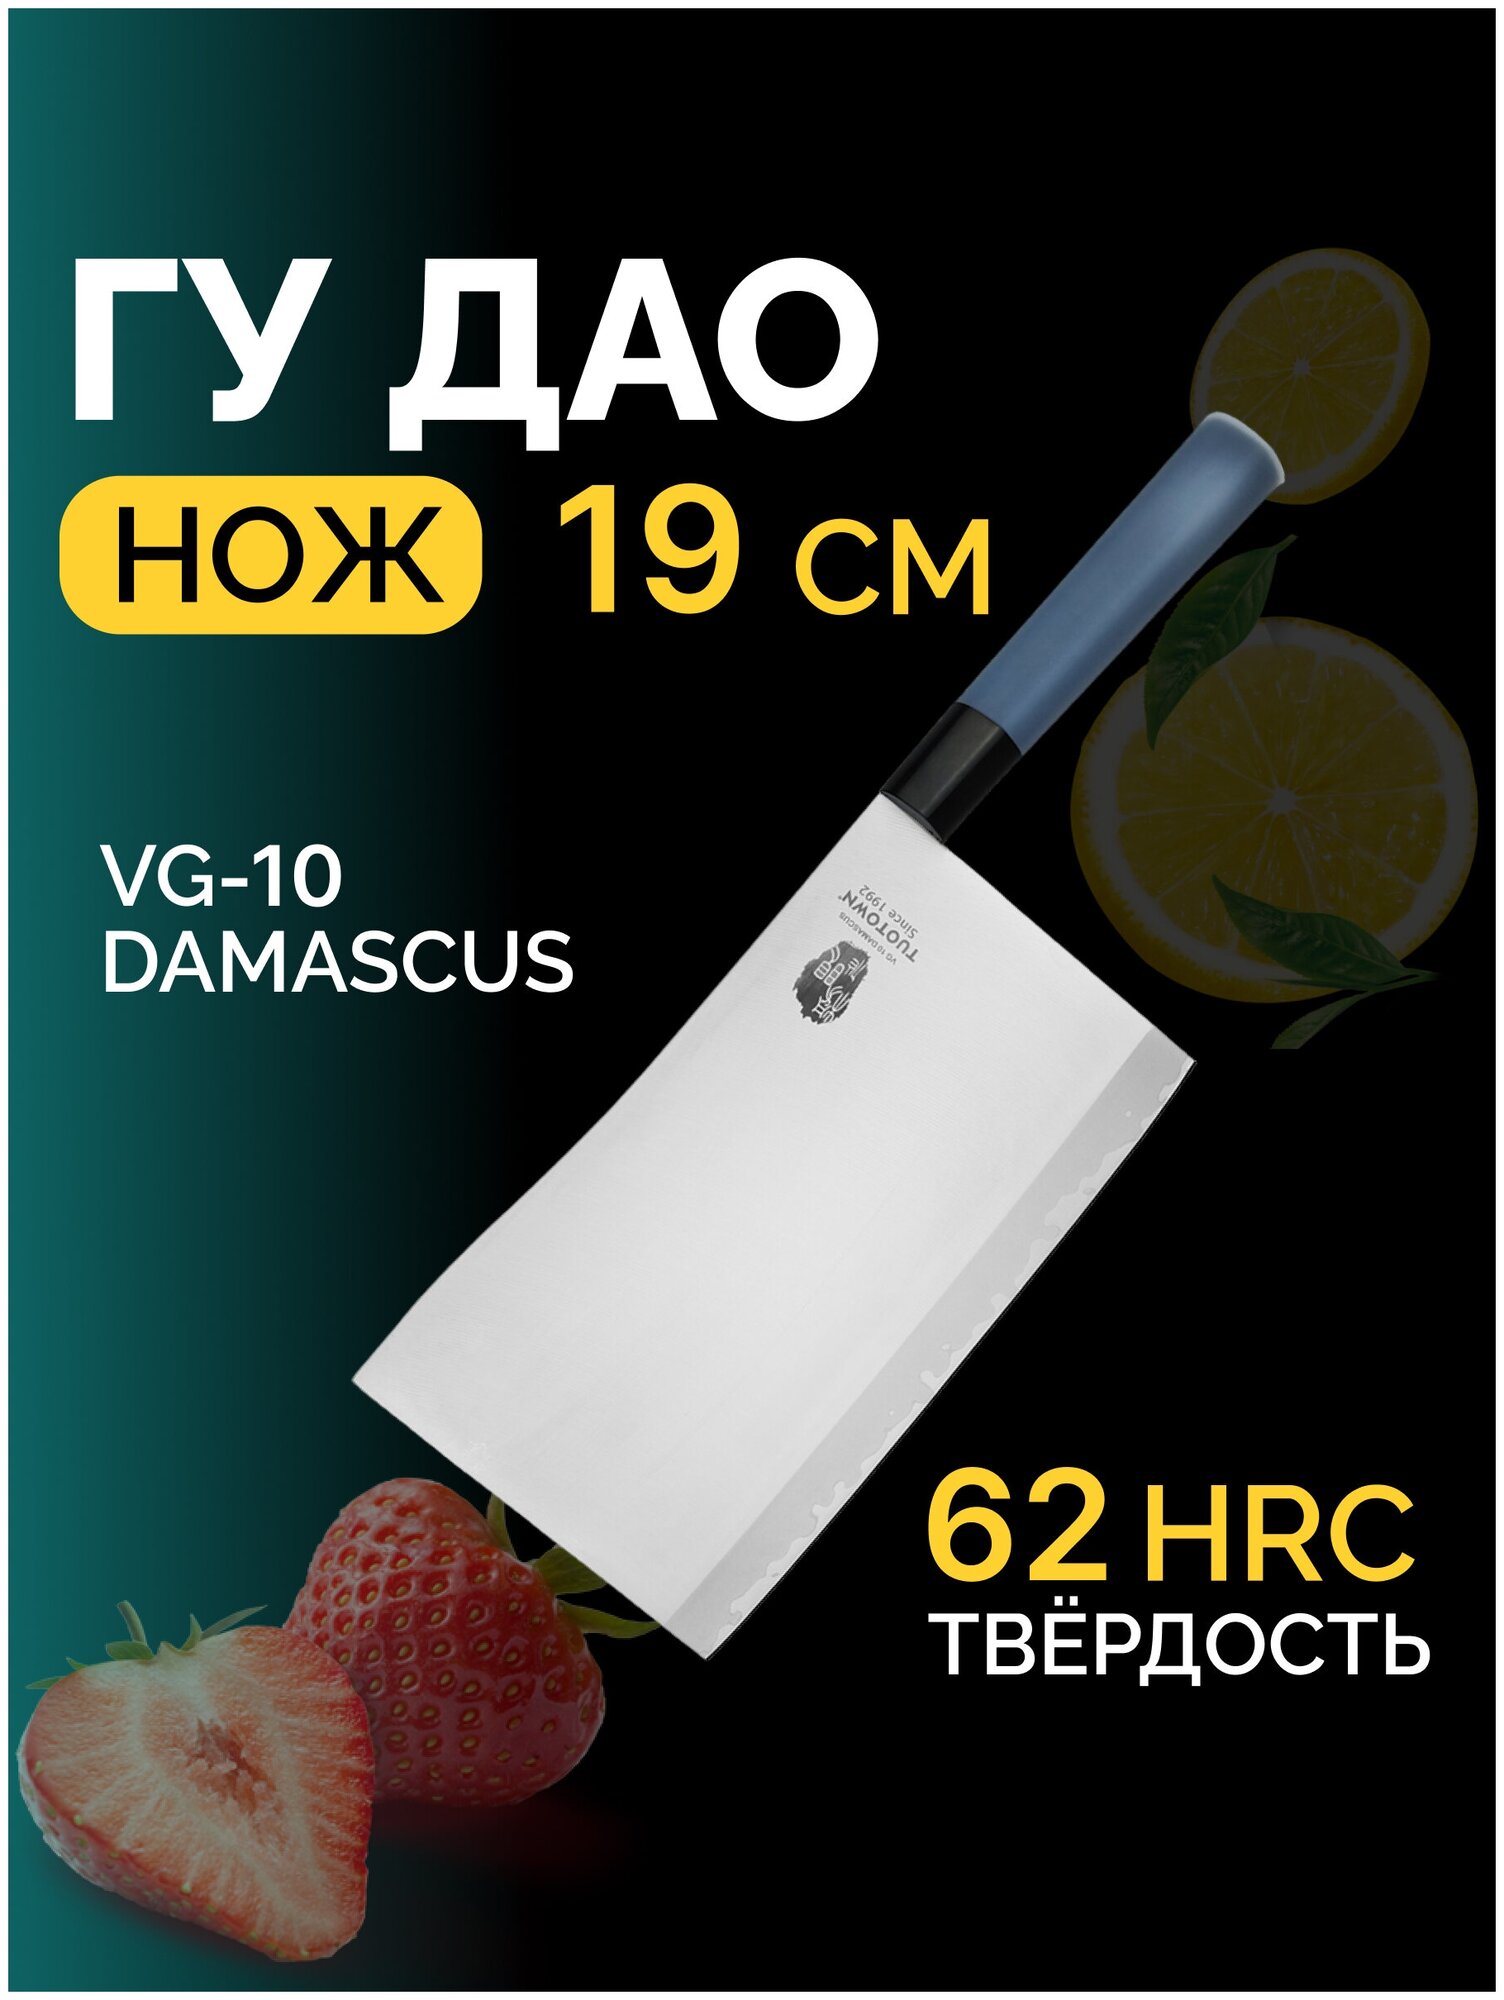 Кухонный нож Гу Дао TUOTOWN 19 см VG10 DAMASCUS